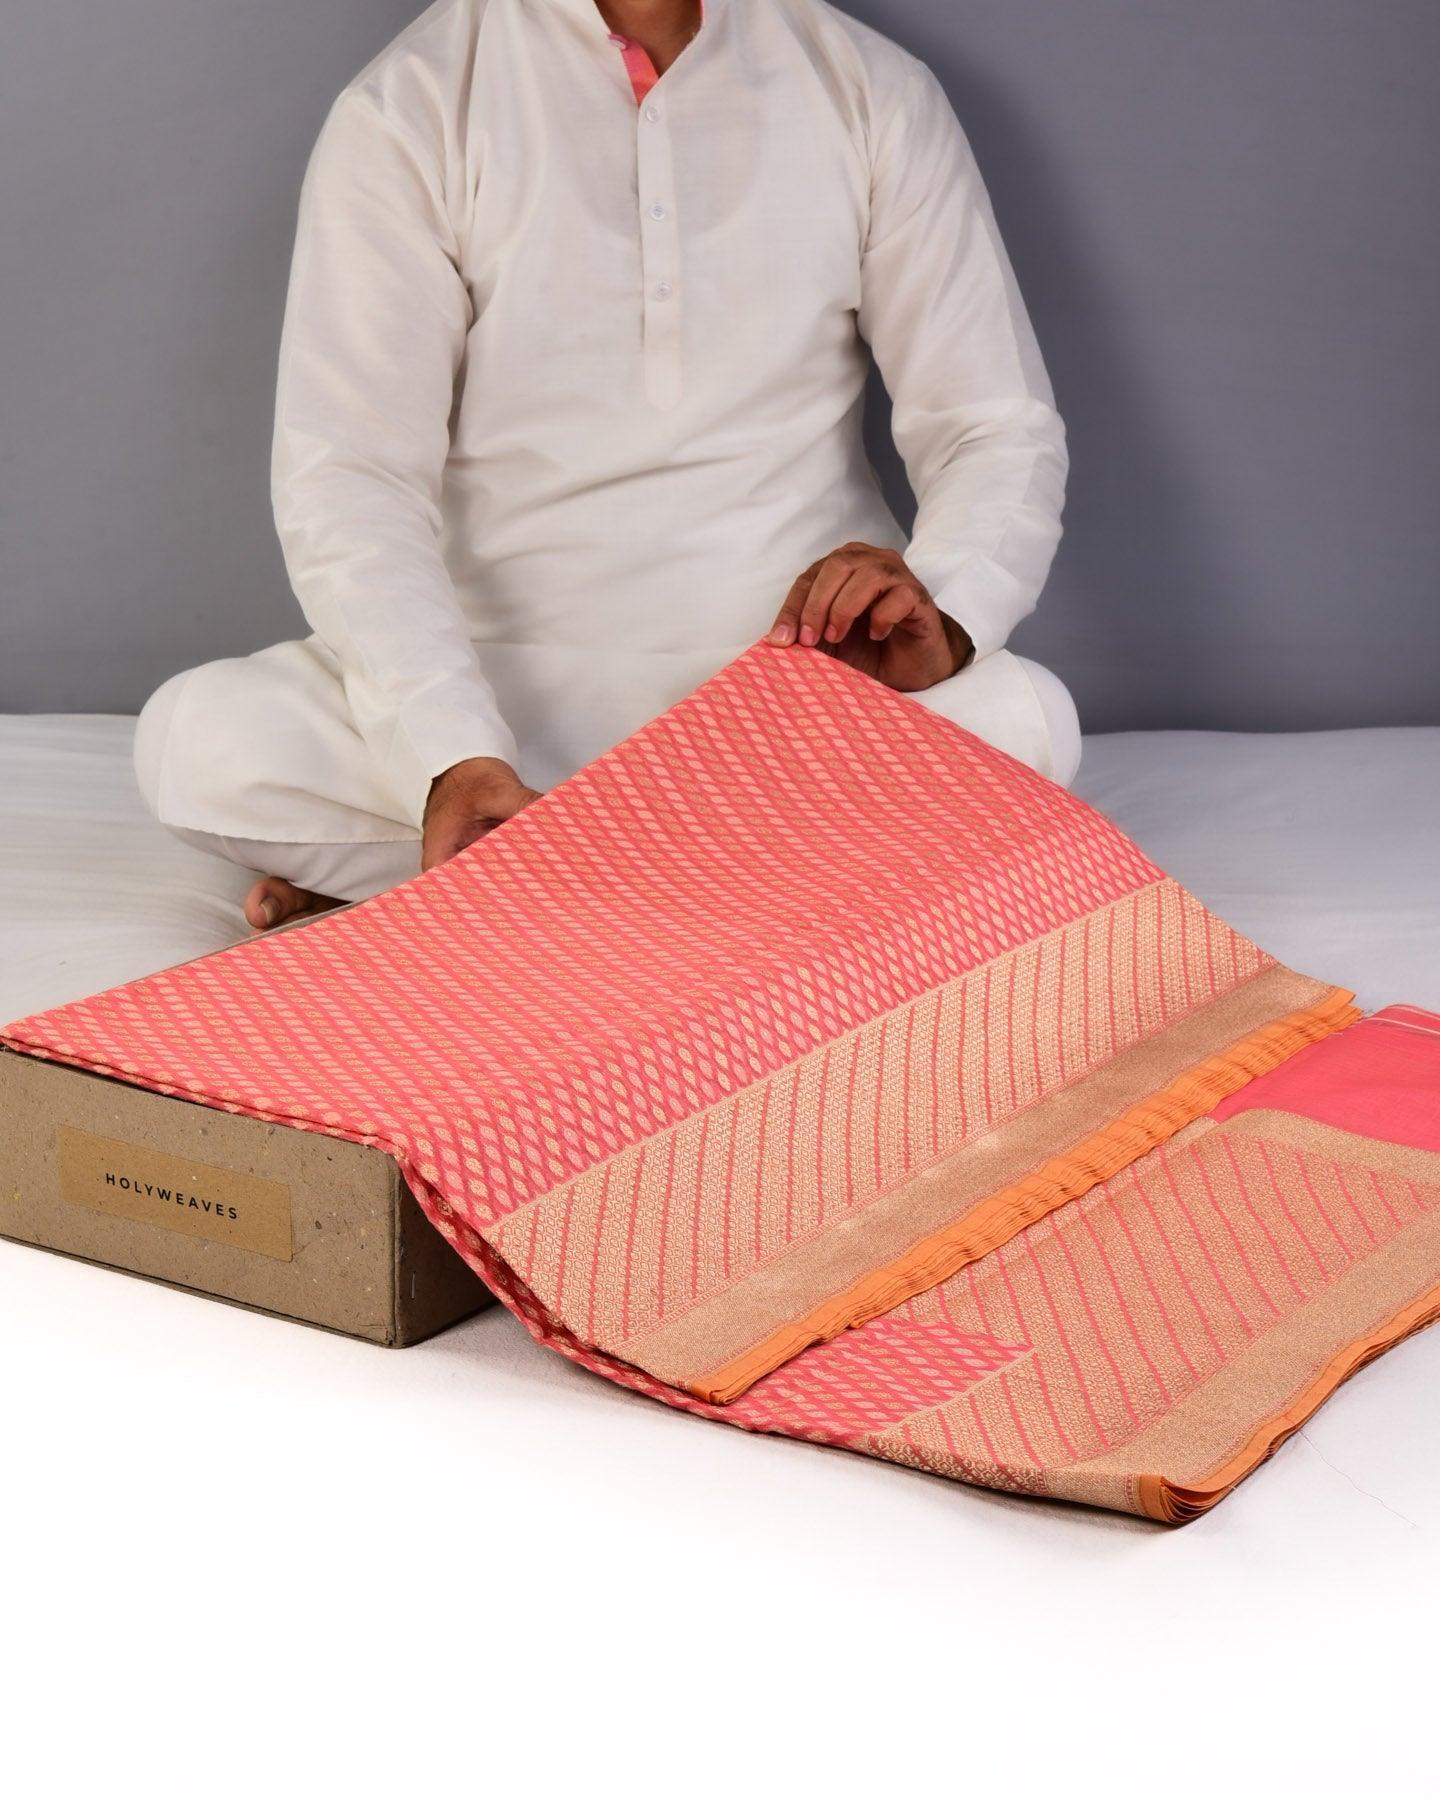 Peach Banarasi Ghani Gold & Cream Buti Cutwork Brocade Handwoven Cotton Silk Saree - By HolyWeaves, Benares